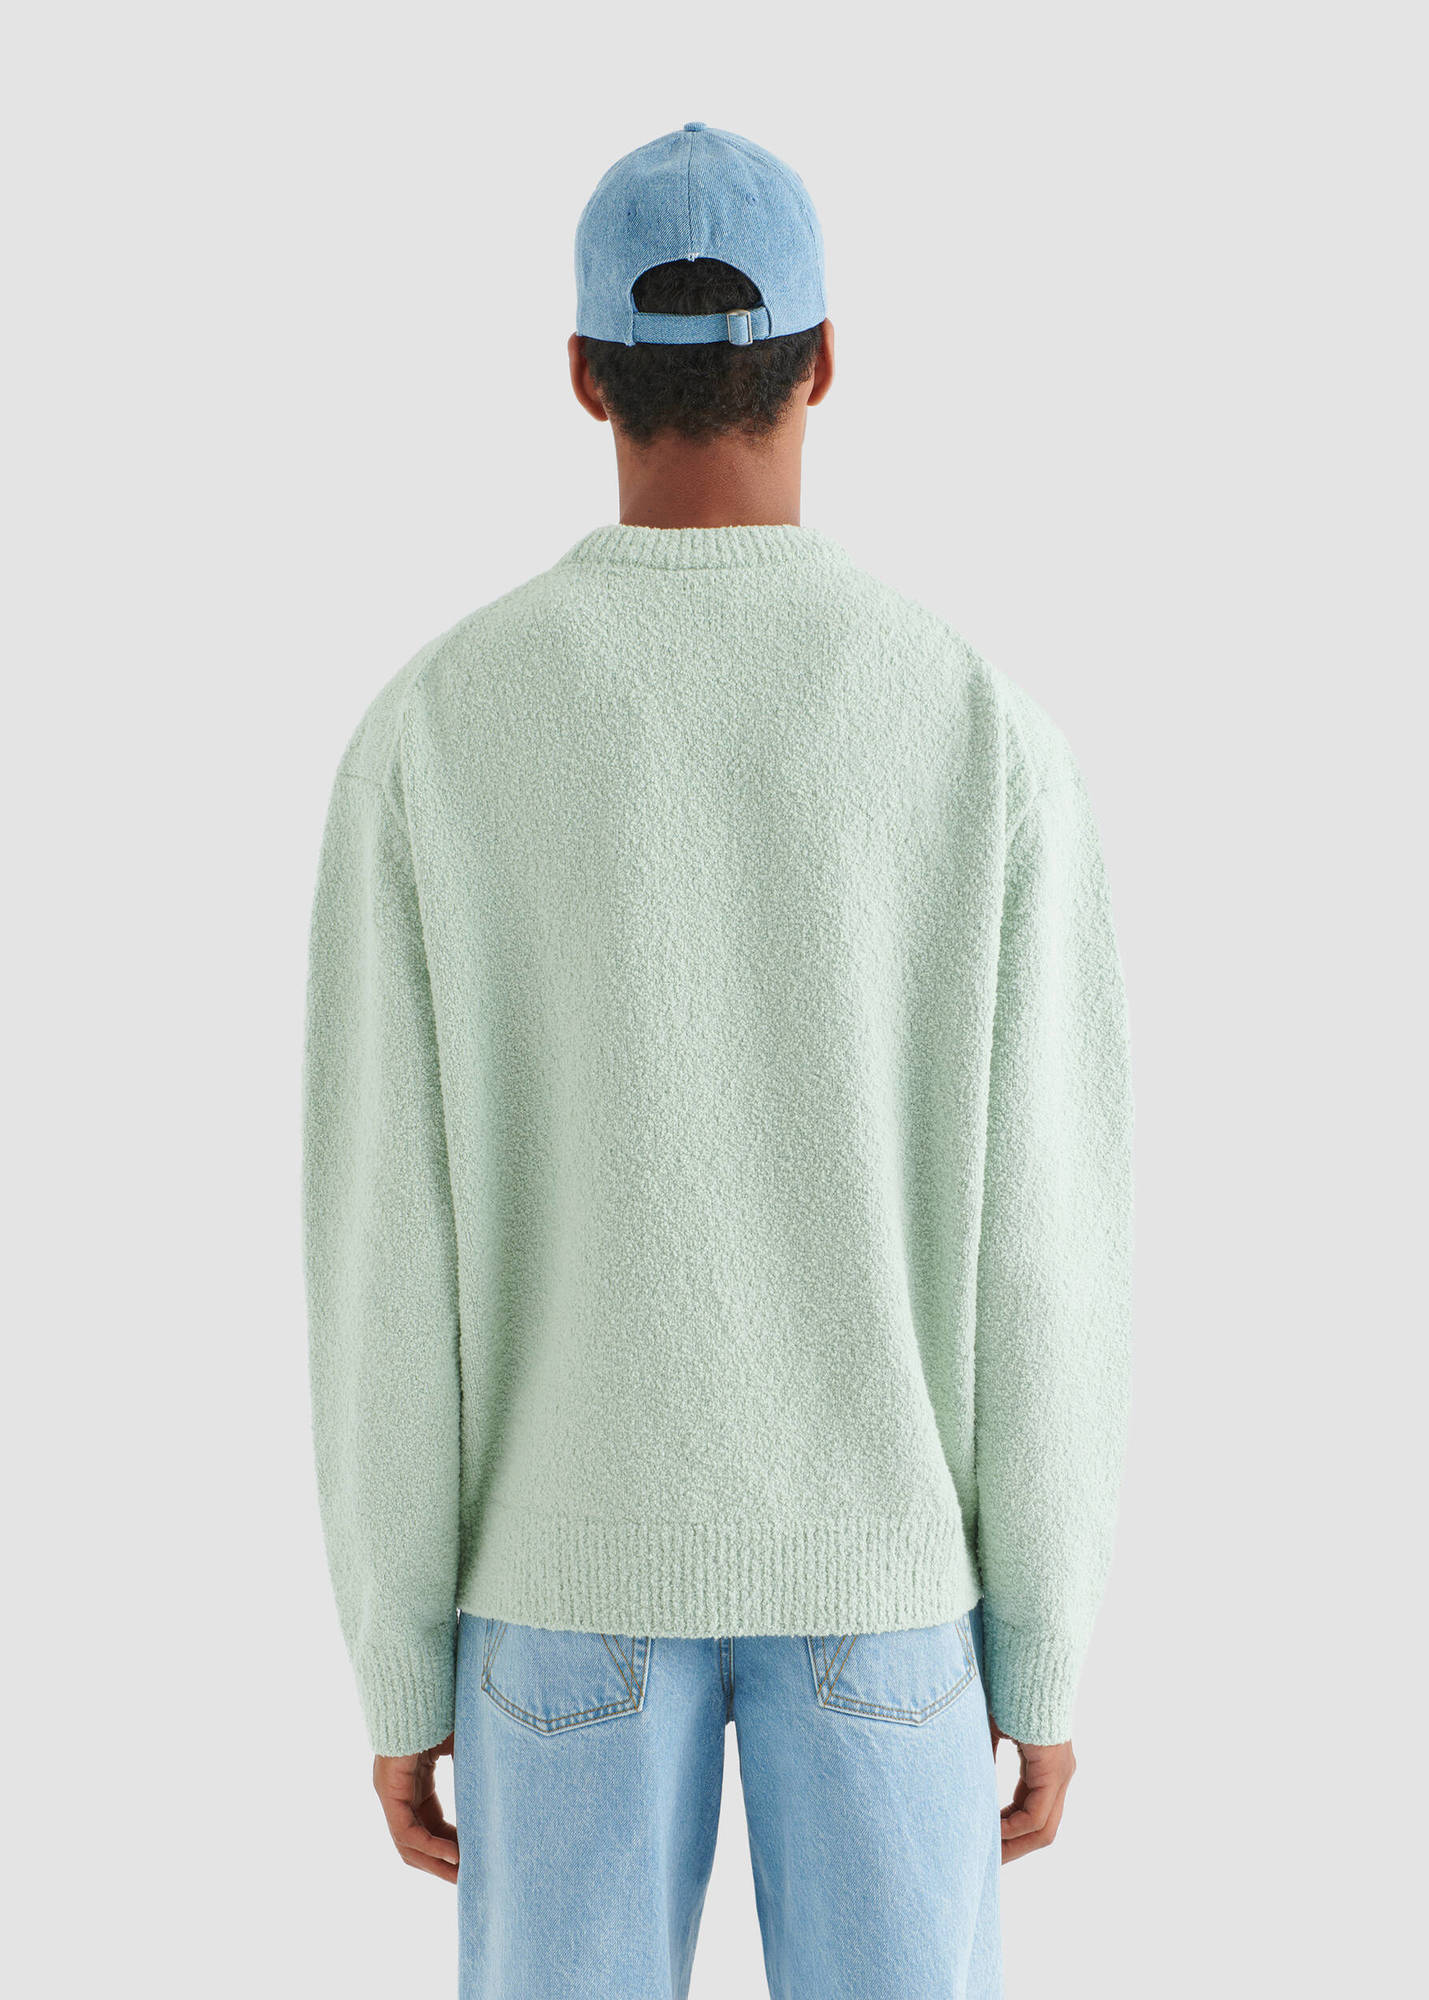 Radar Sweater